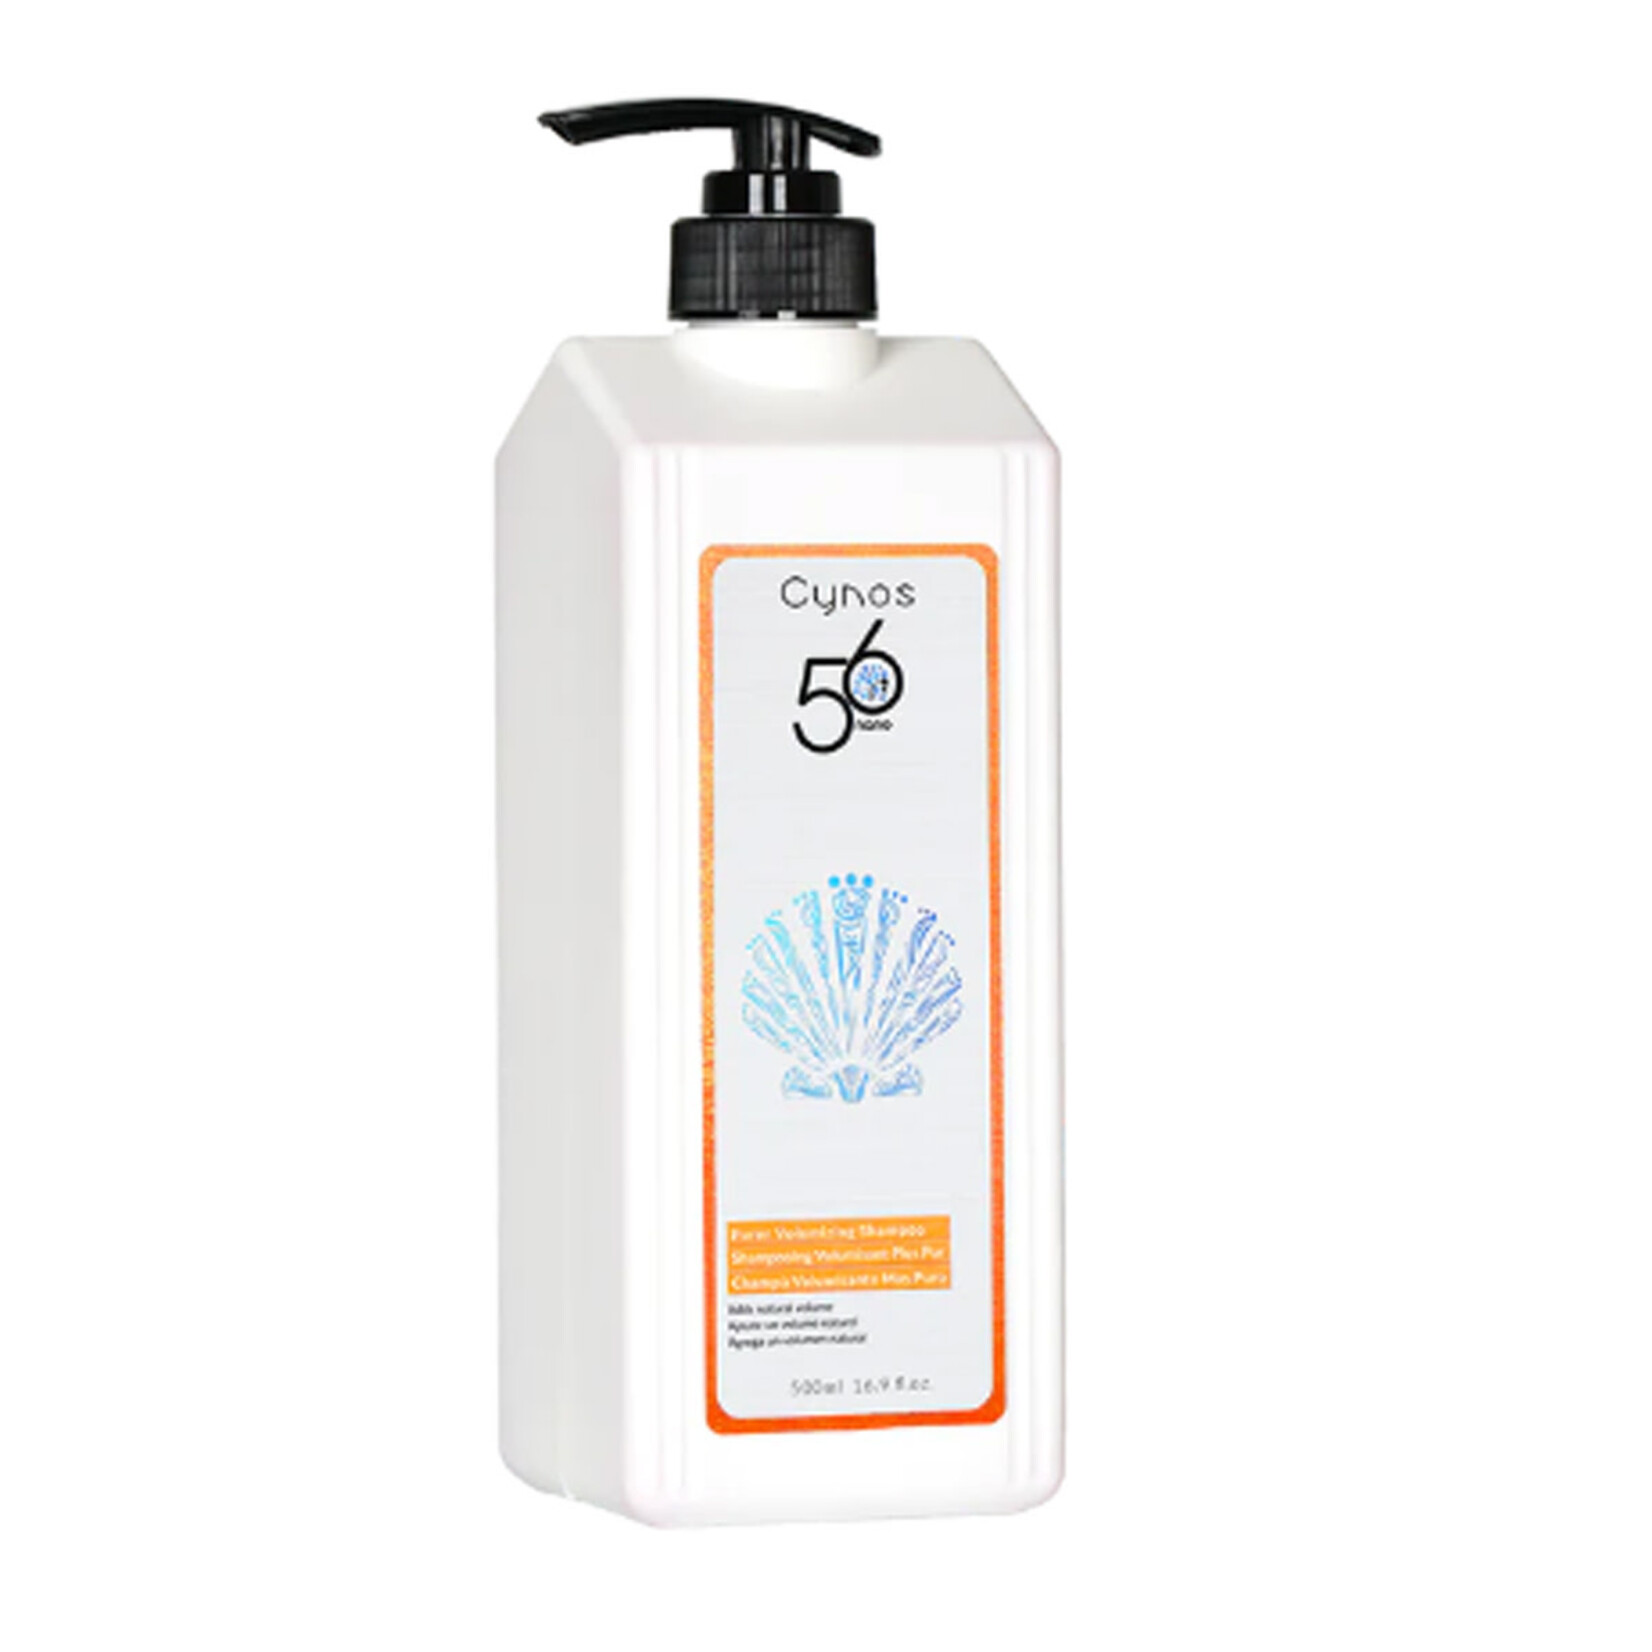 Cynos Cynos - 56 Nano - Purer volumizing shampoo 1L